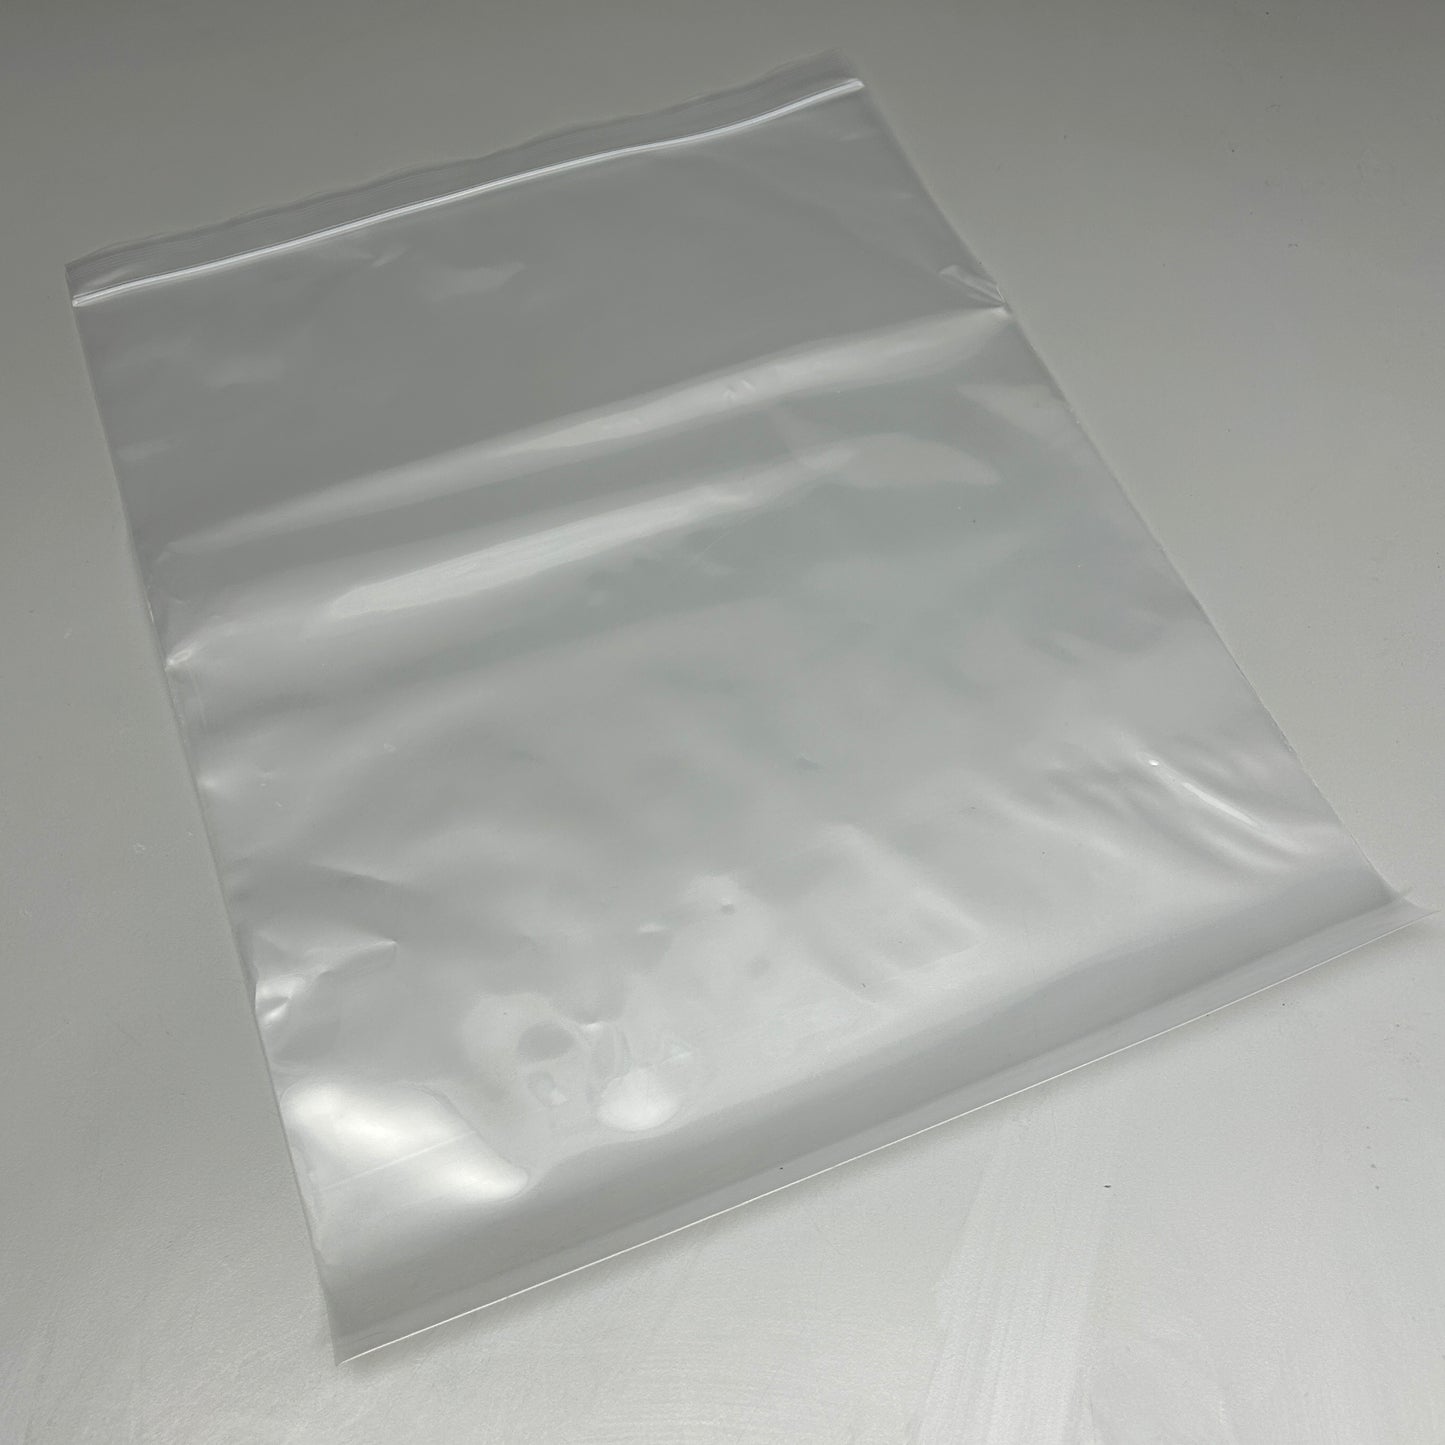 5-PACK! GGS 2 Gallon Standard Weight Seal Top Freezer Bag 100 Ct (New)